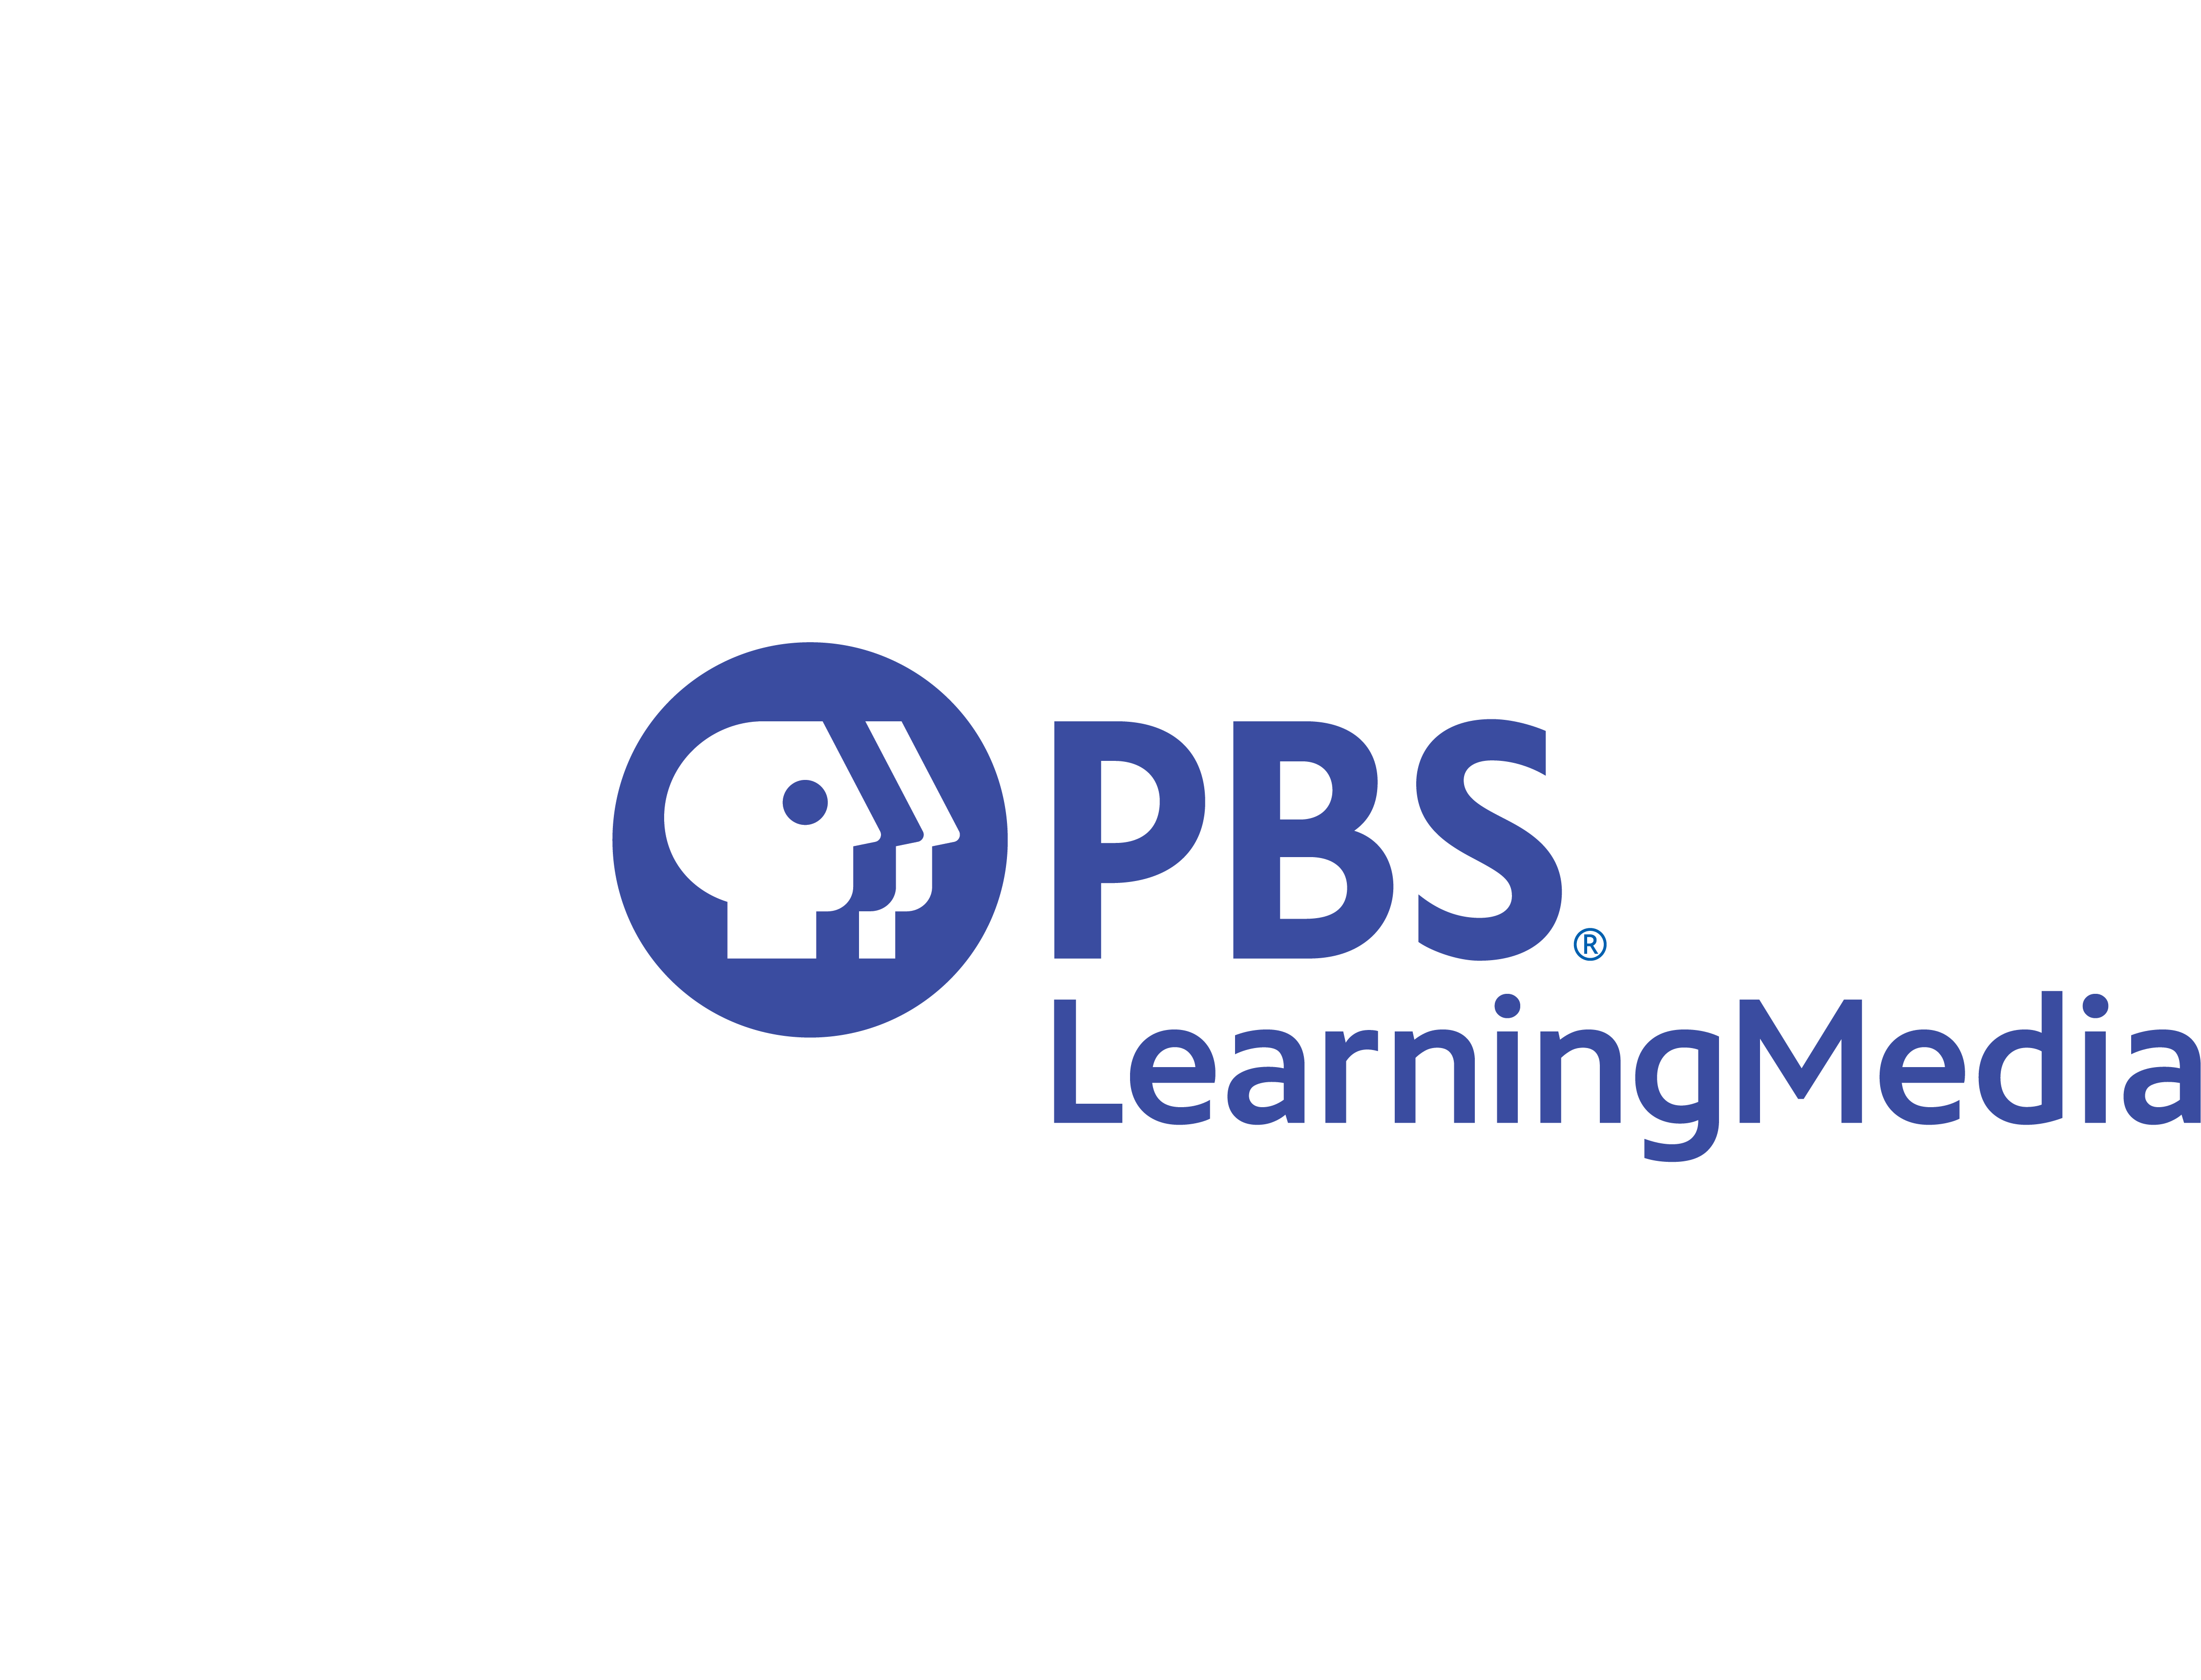 PBS Learning Media Logo